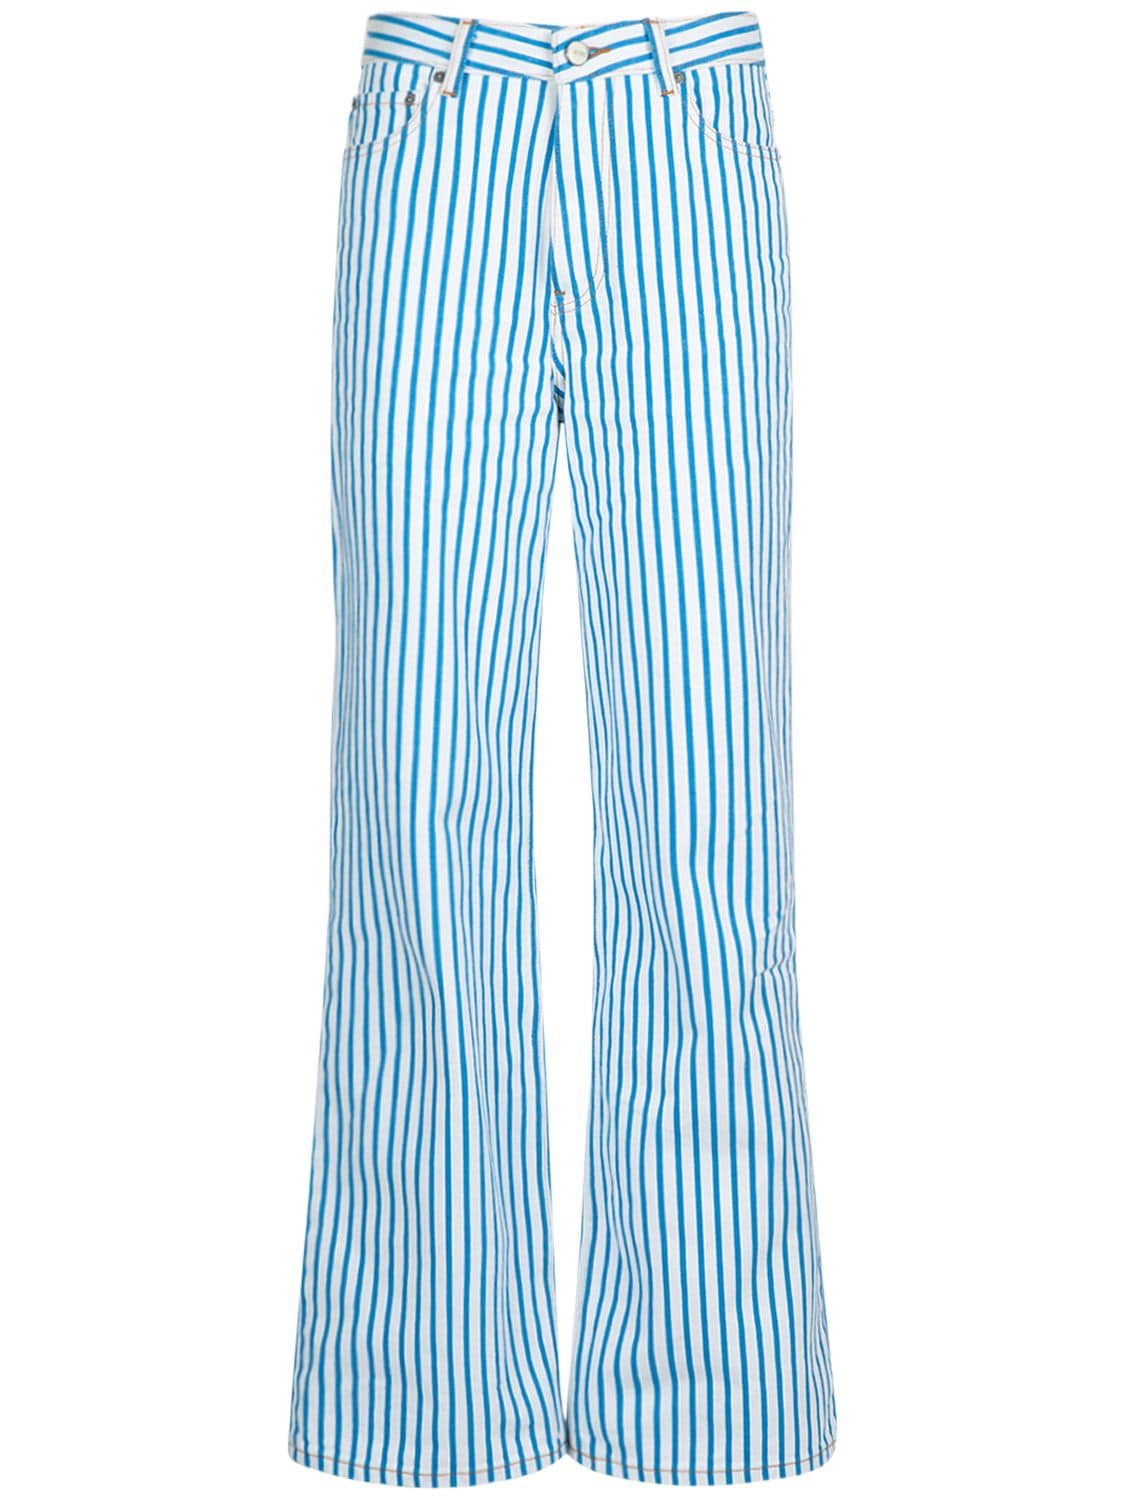 Striped Cotton Denim Jeans image